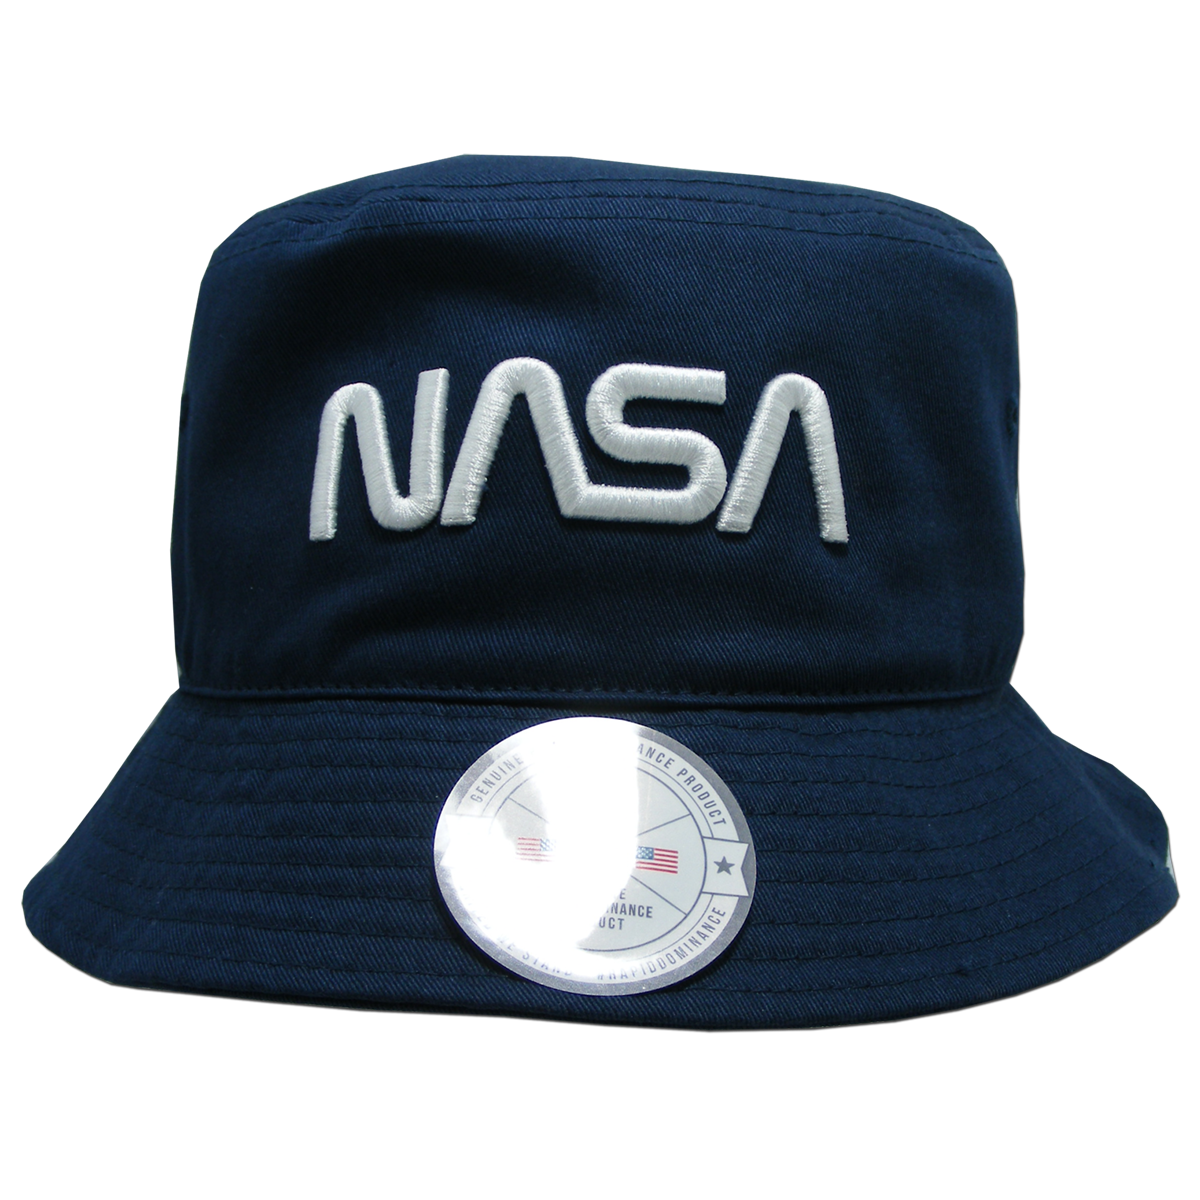 NASA Relaxed Bucket Hats